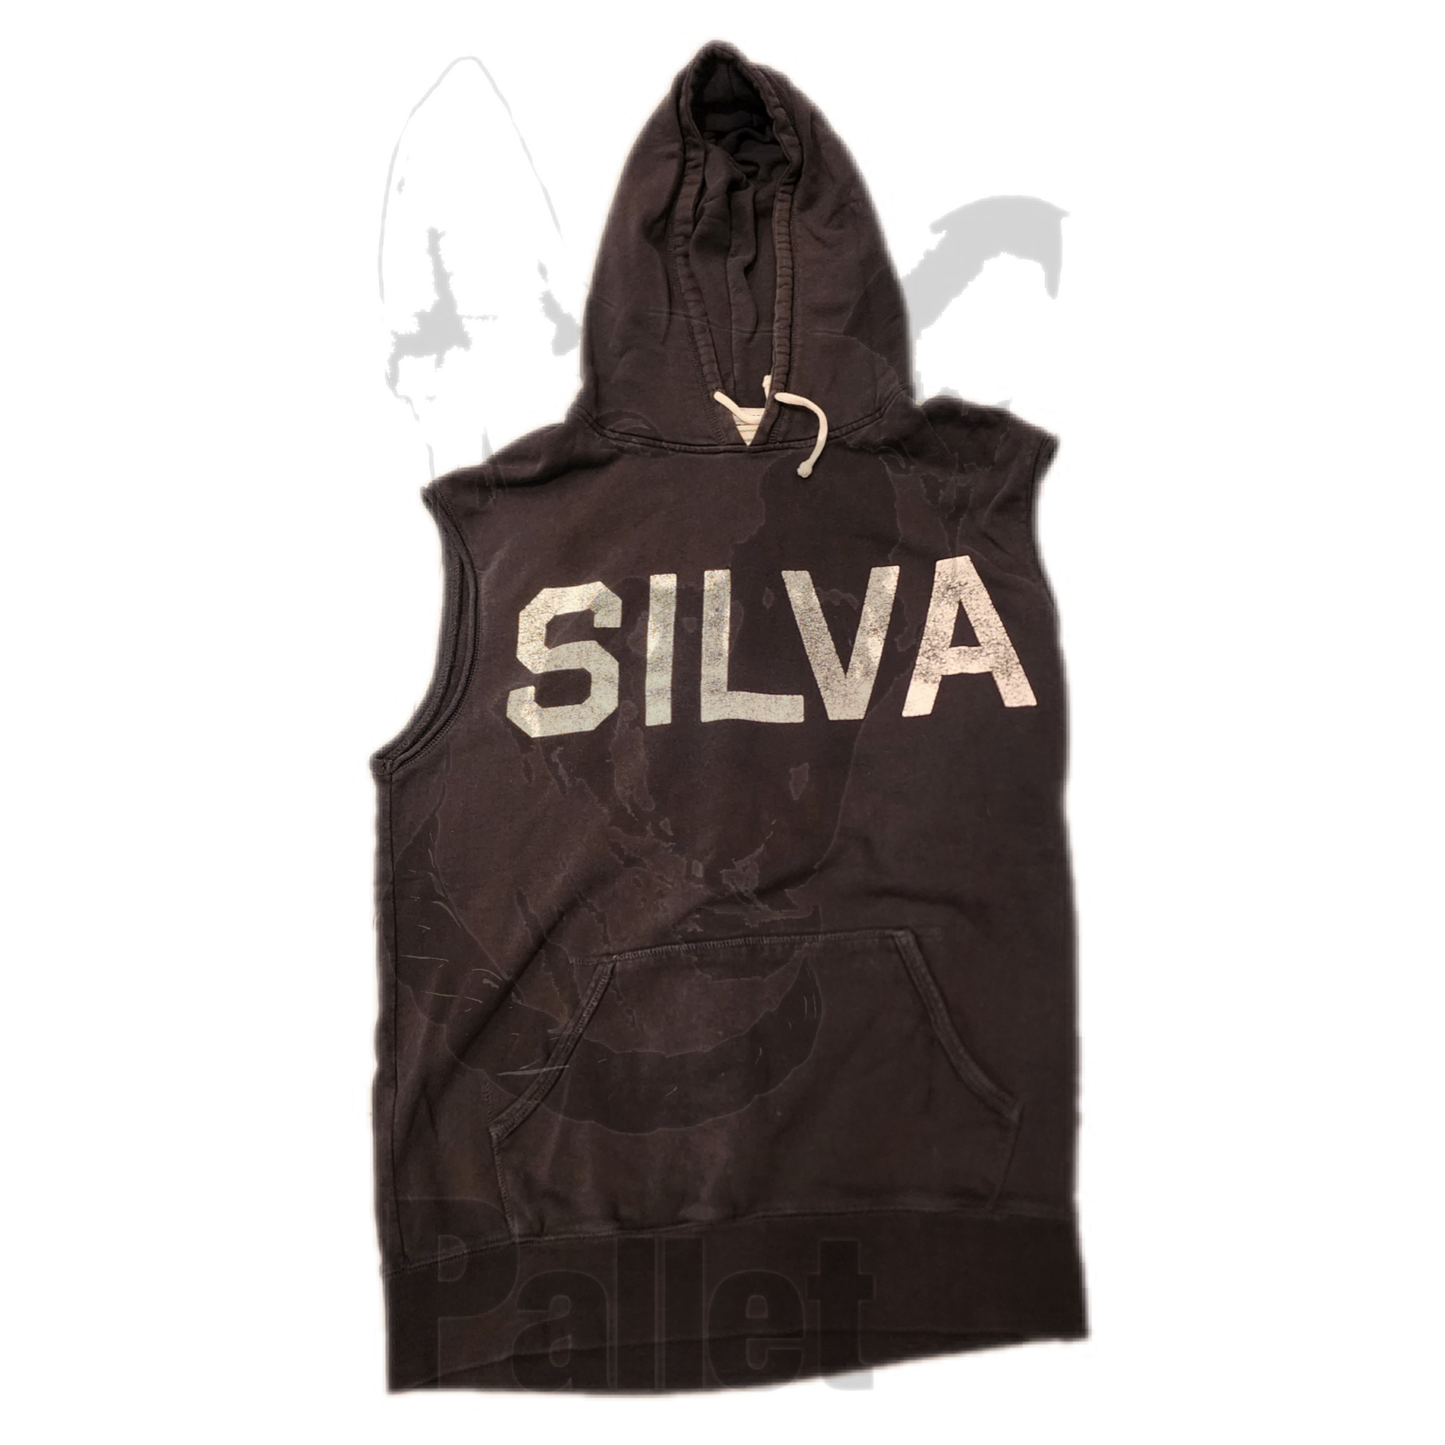 Trade Mark - "Silva Cutoff Hoodie" - Size Large